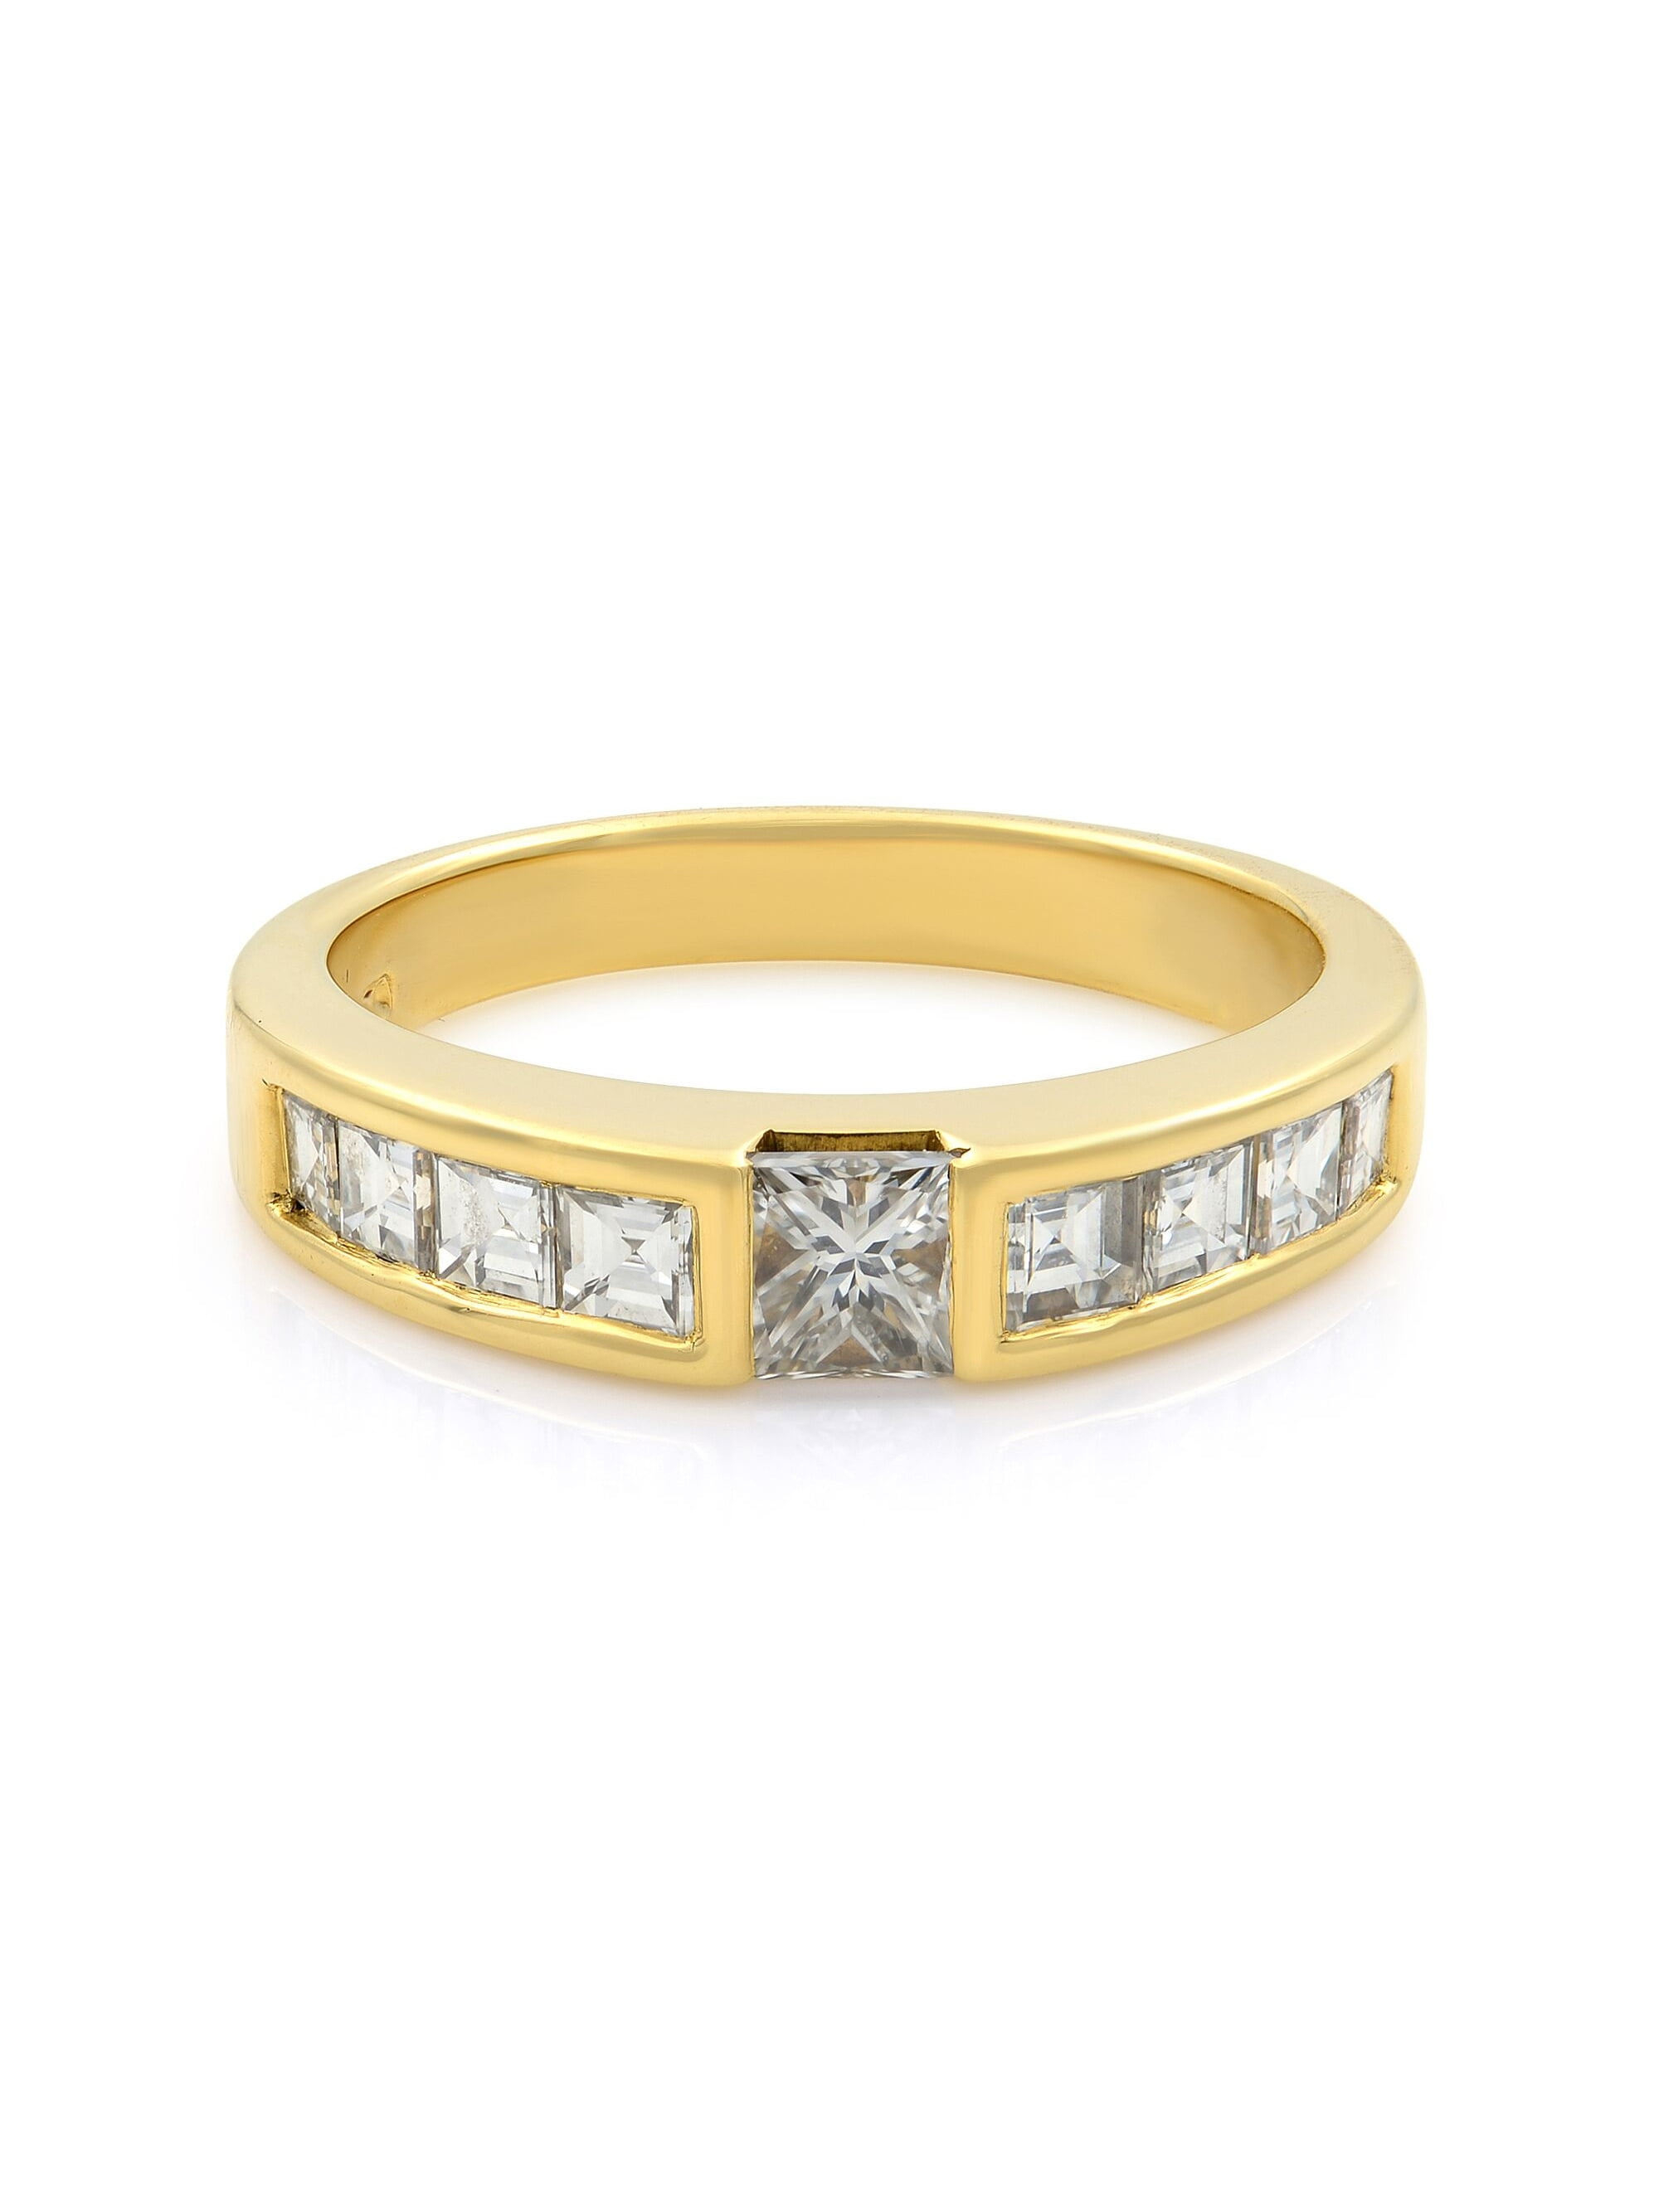 Tiffany & Co 18K Yellow Gold Princess Cut Diamond Stack Ring 0.77cttw SZ 6